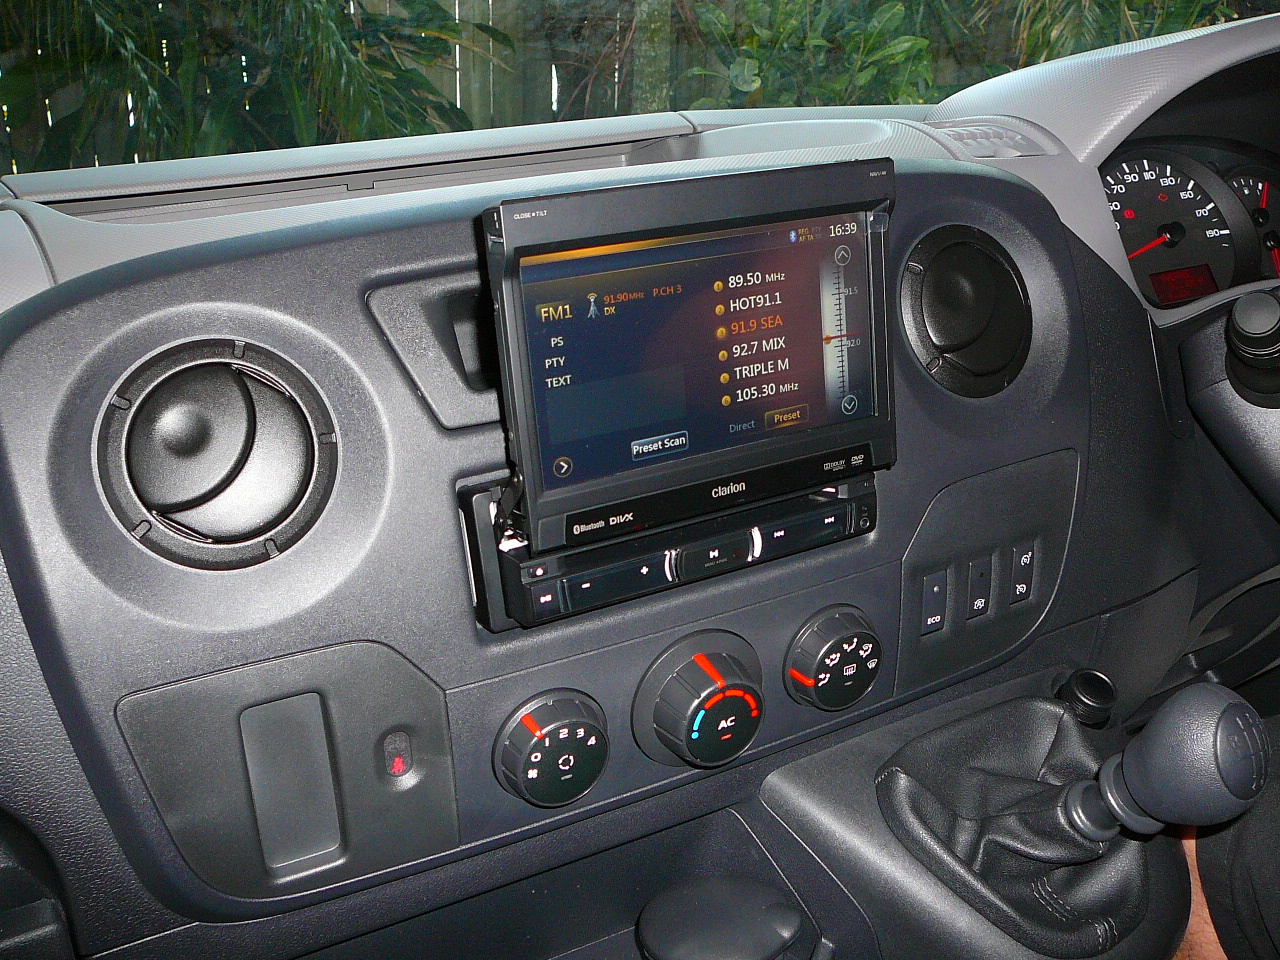 Renault Master 2015, Clarion NX502 In Dash GPS Navigation